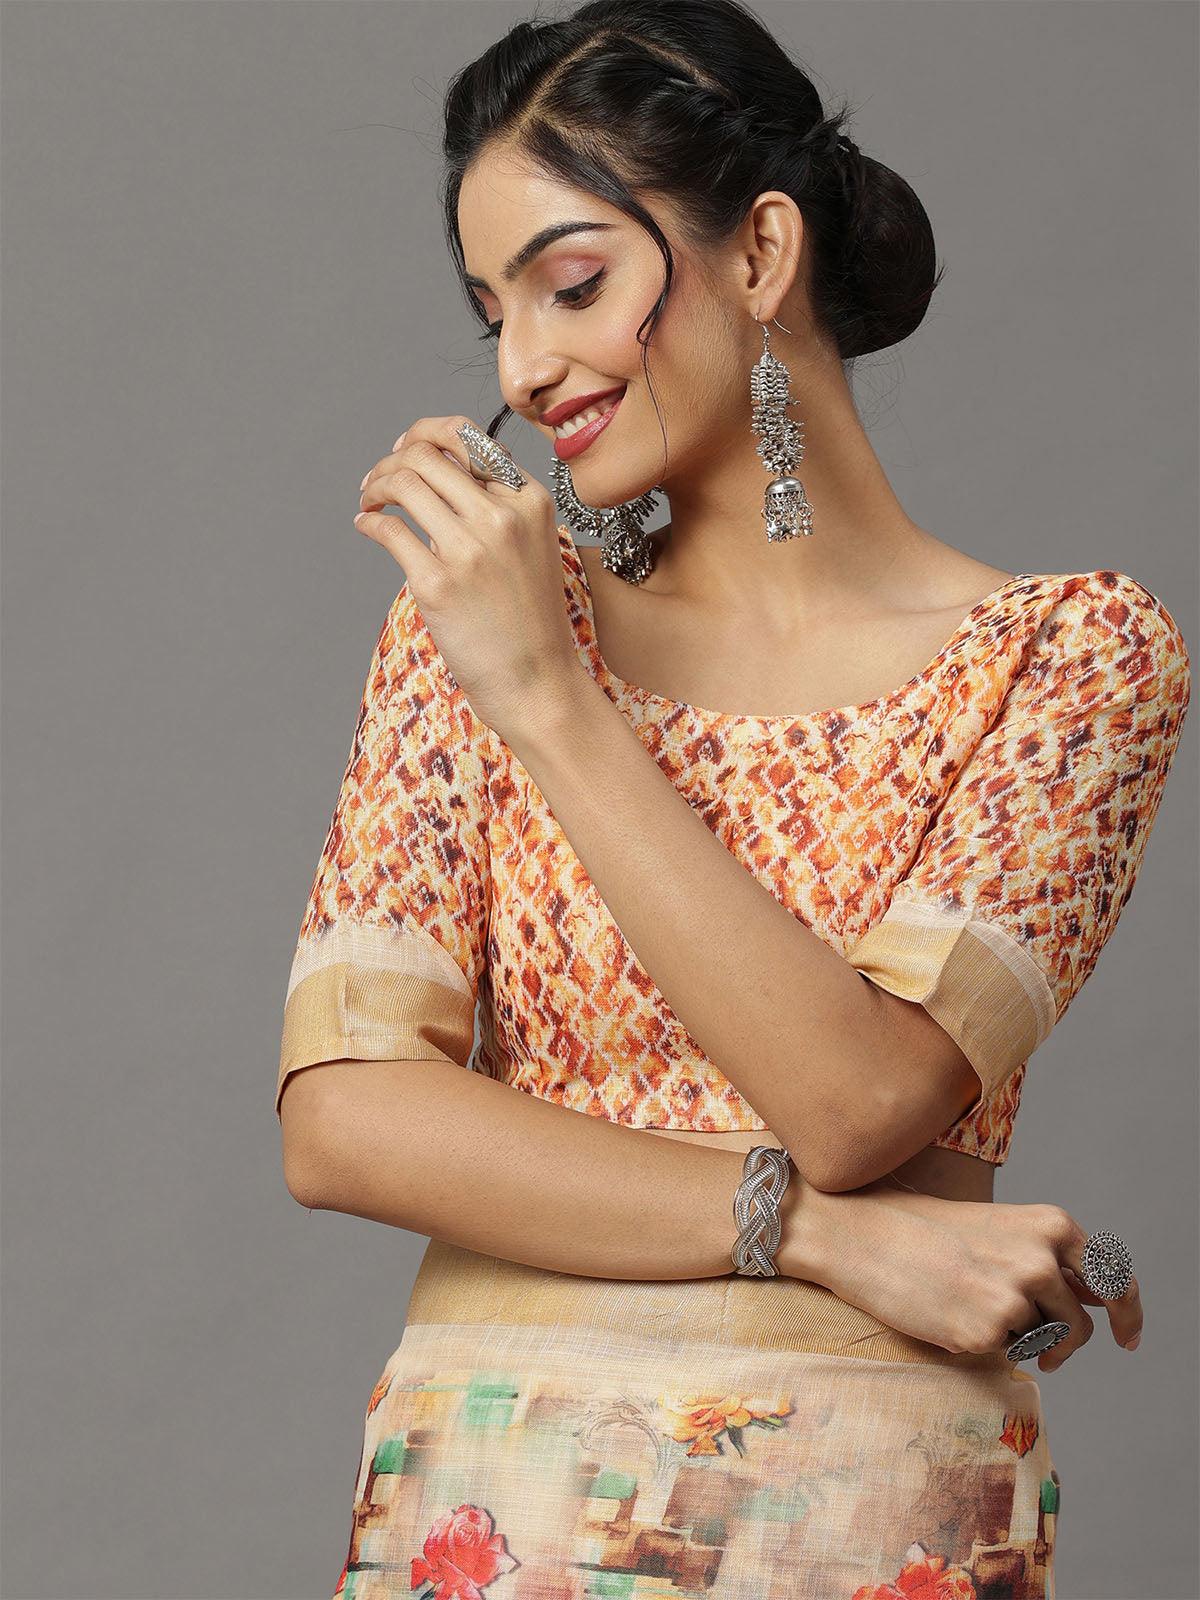 Women's Linen Cream Printed Designer Saree With Blouse Piece - Odette